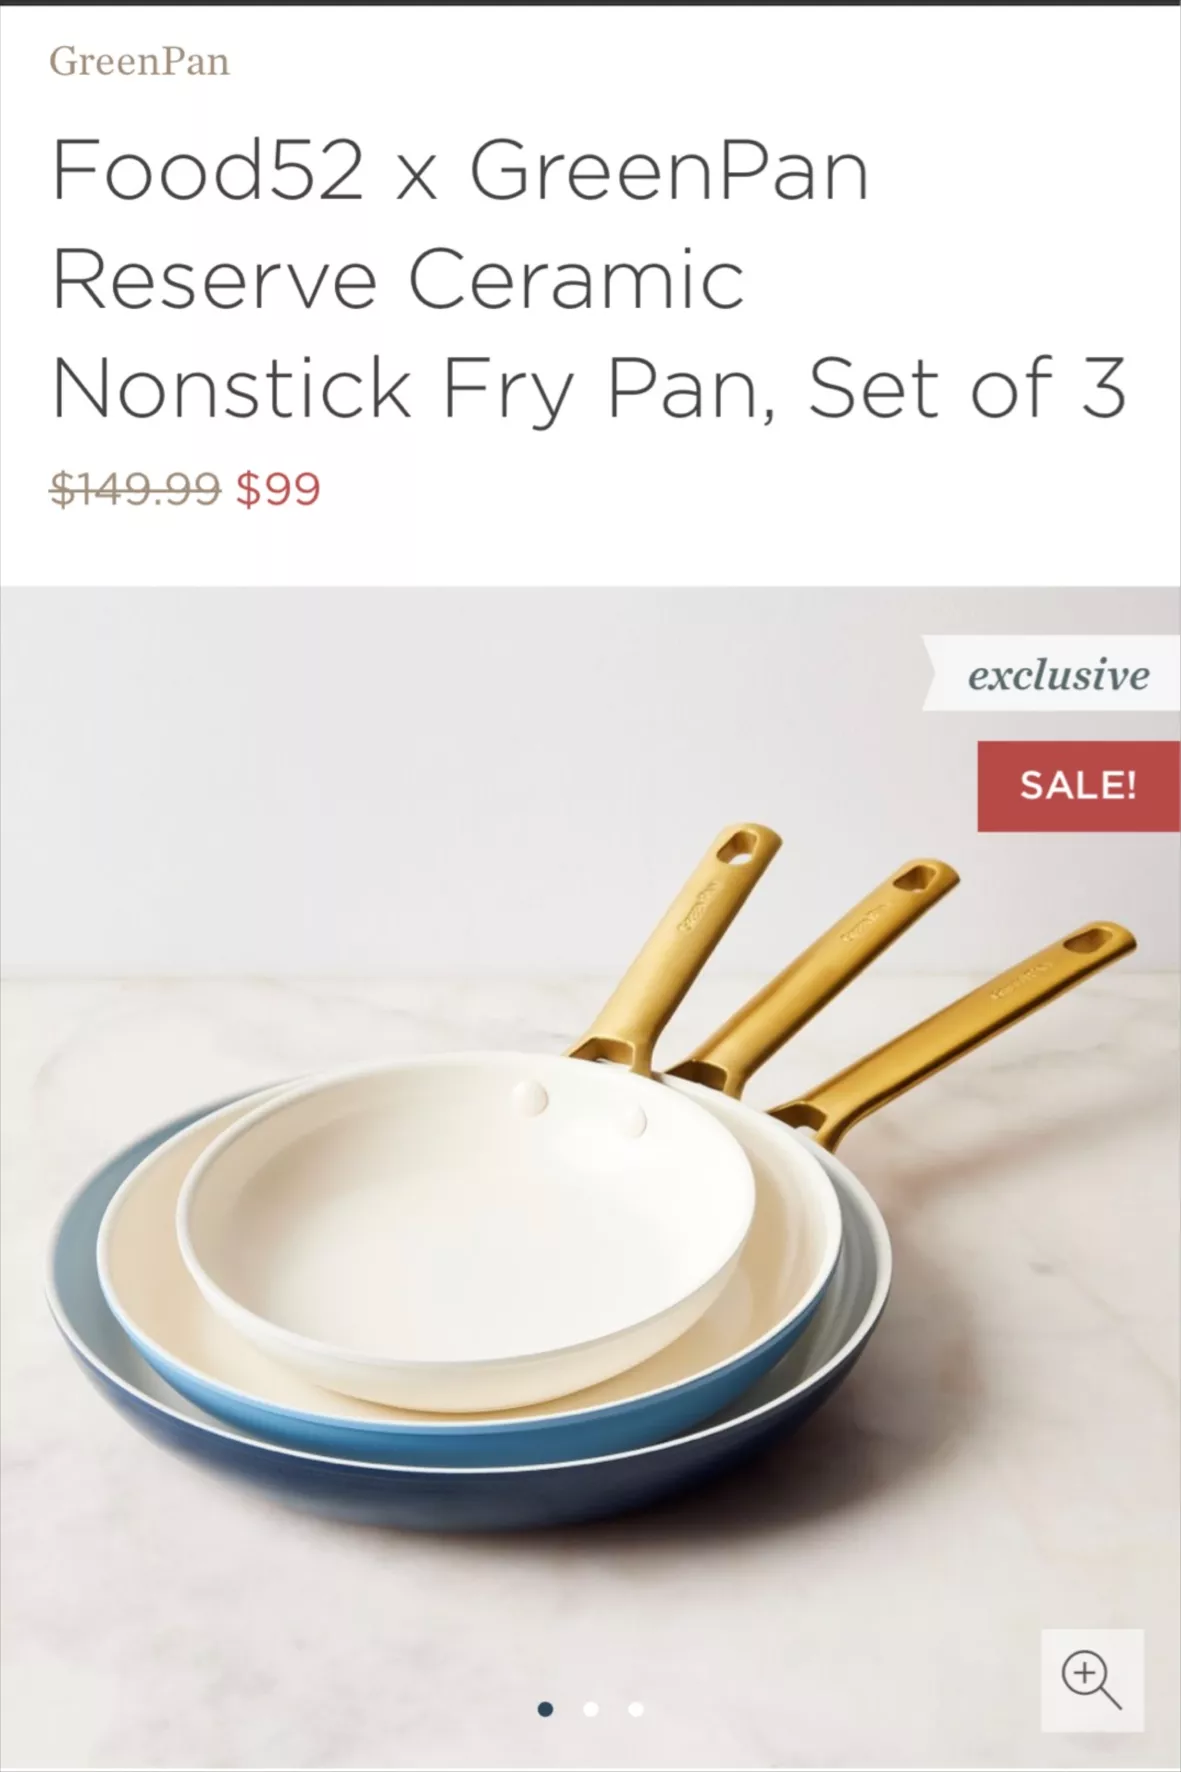 GreenPan Reserve Ceramic Nonstick Fry Pans, Set of 3 on Food52